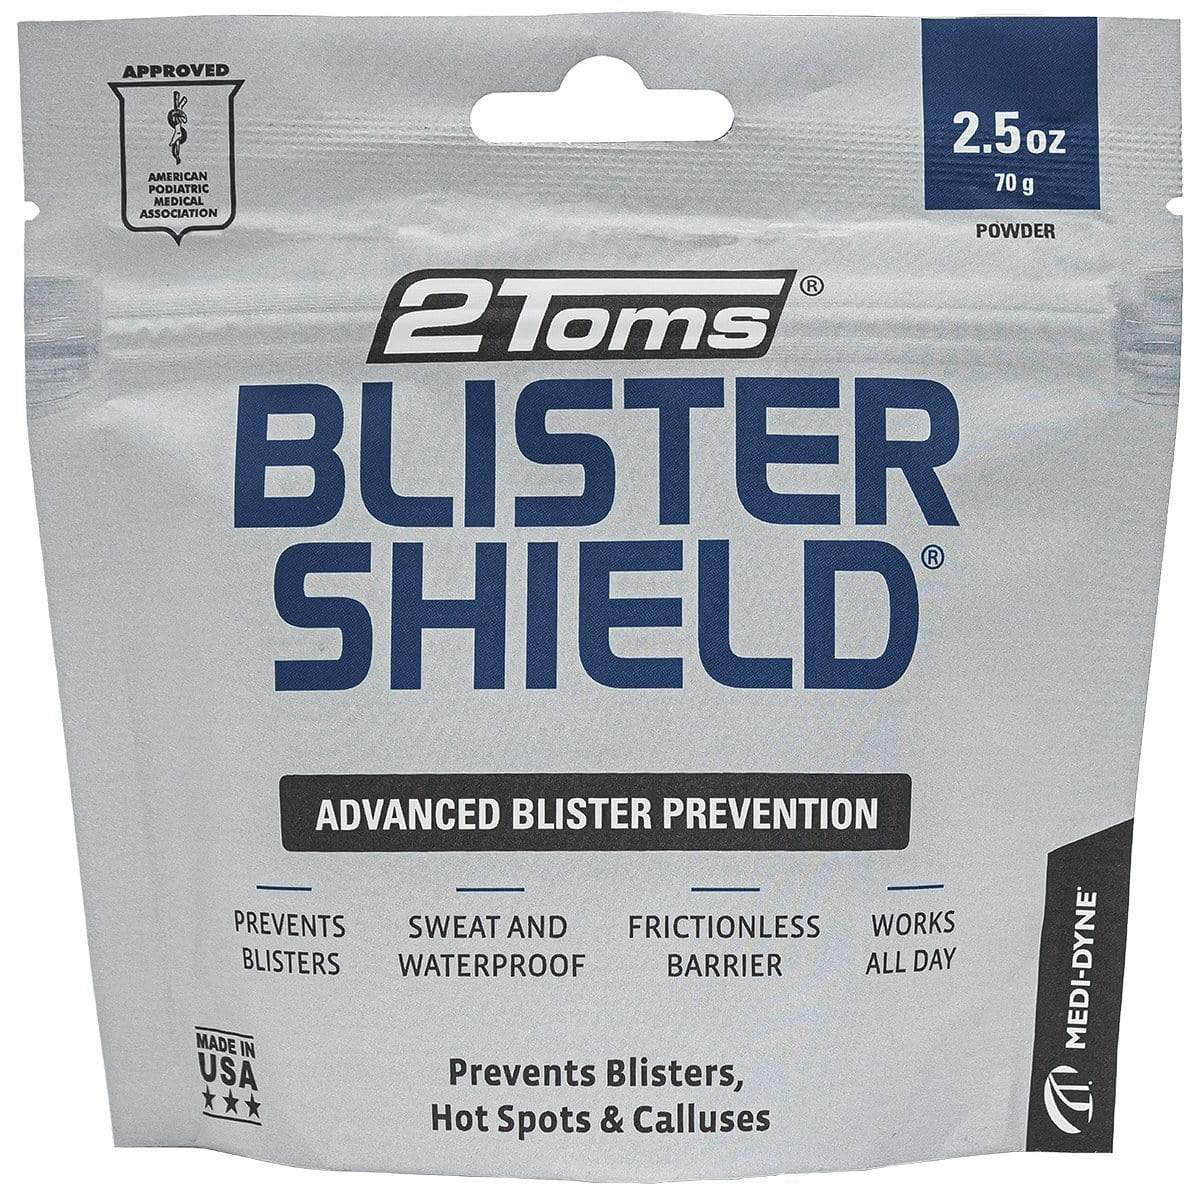 2Toms Blister Shield